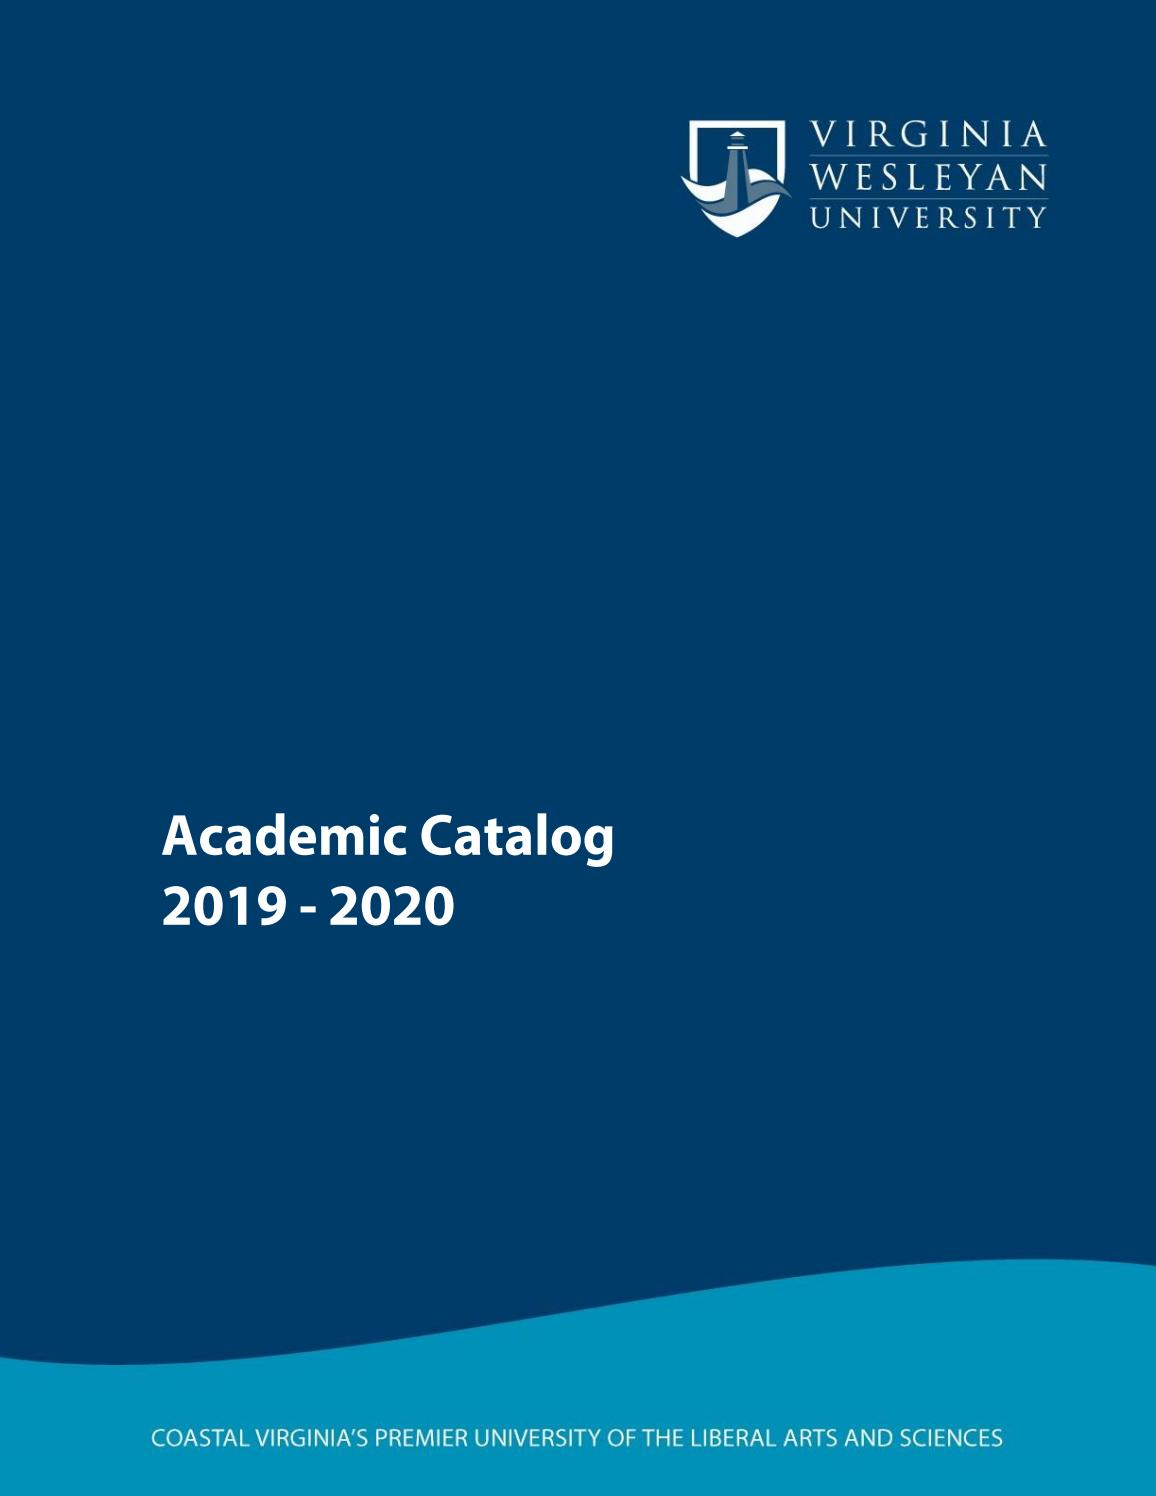 2019-2020 Undergraduate Academic Catalog By Virginia